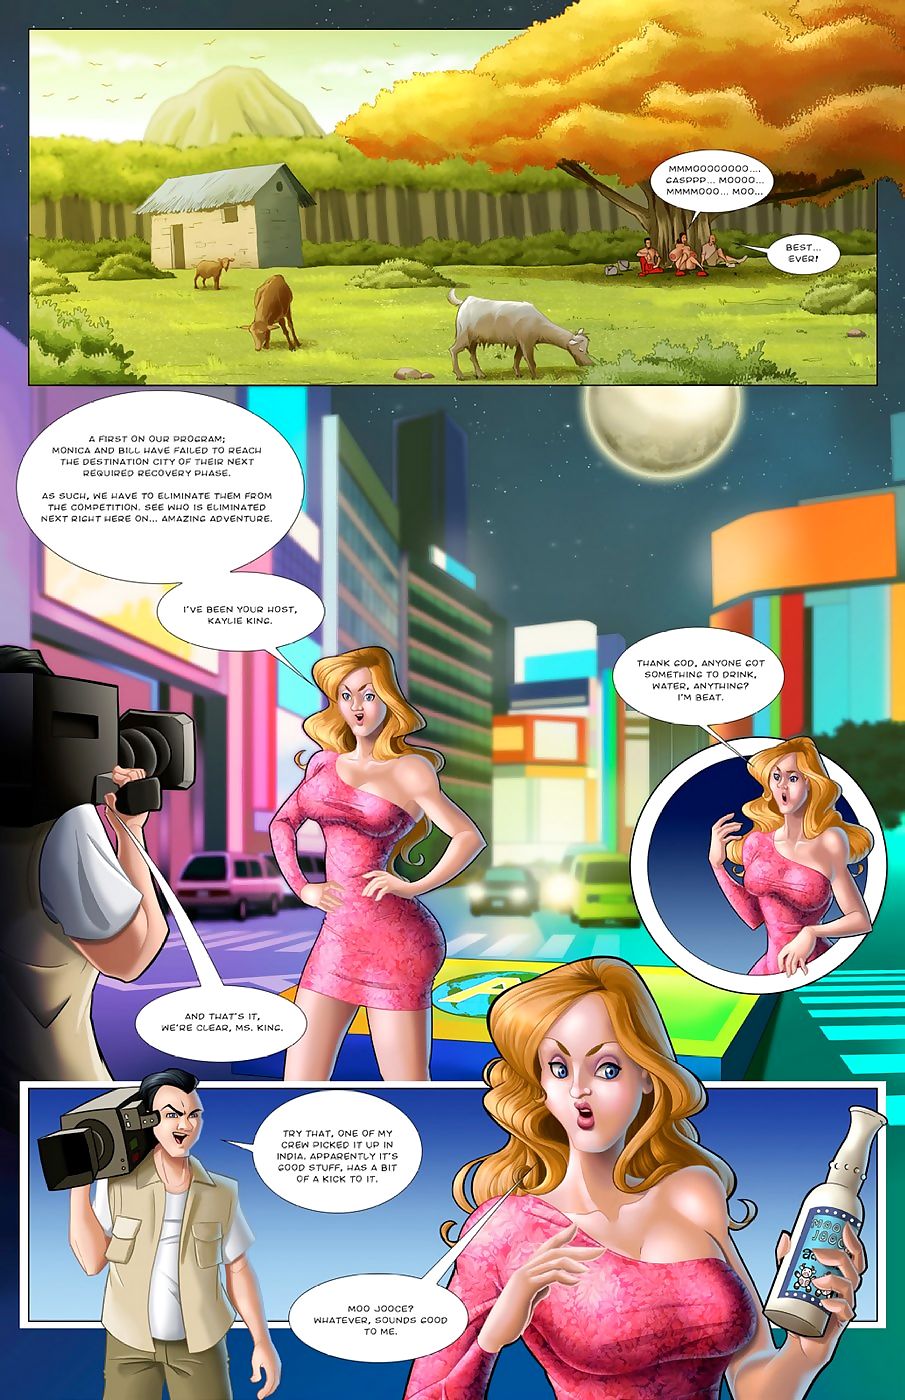 Moo-nicas Amoo-zing Adventure- Botcomics page 1